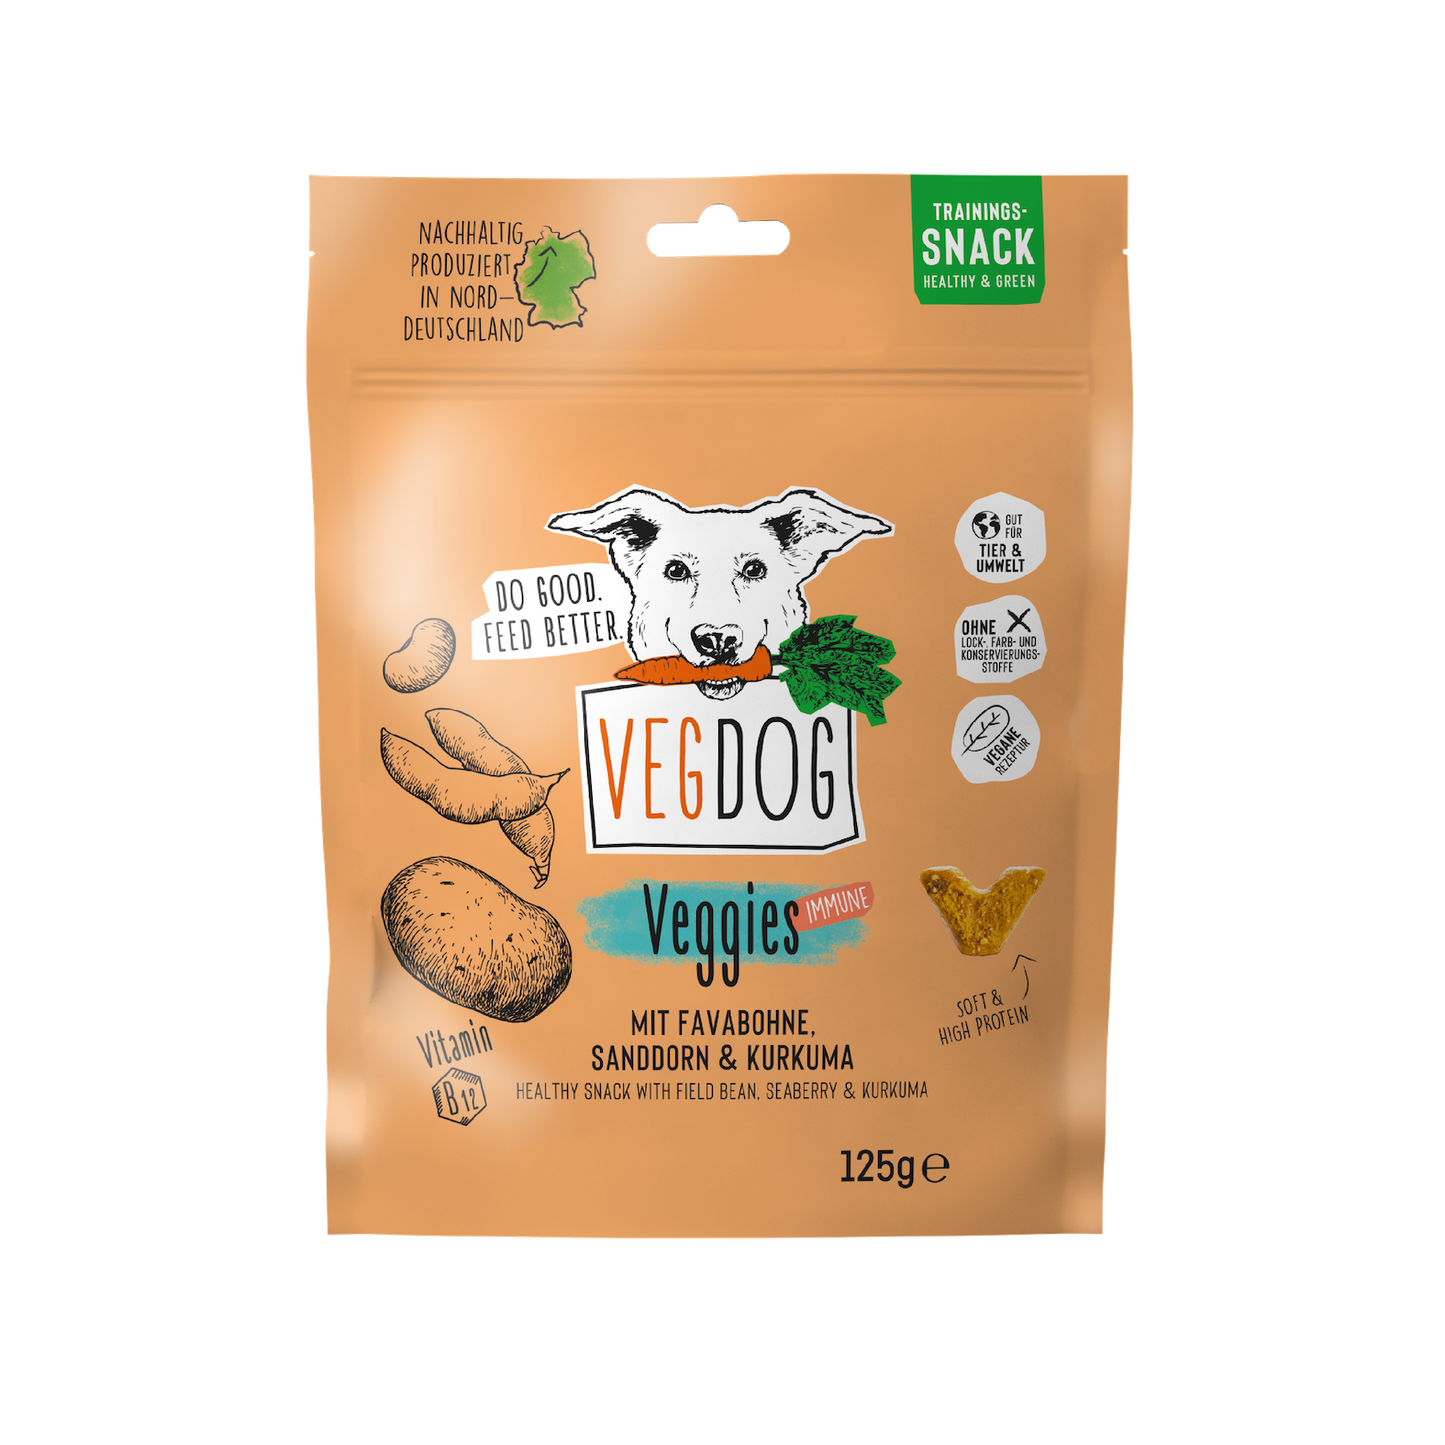 VEGDOG Hundetrainingssnack "VEGGIES immune" mit Favabohne, Sanddorn & Kurkuma - 125g | vegan